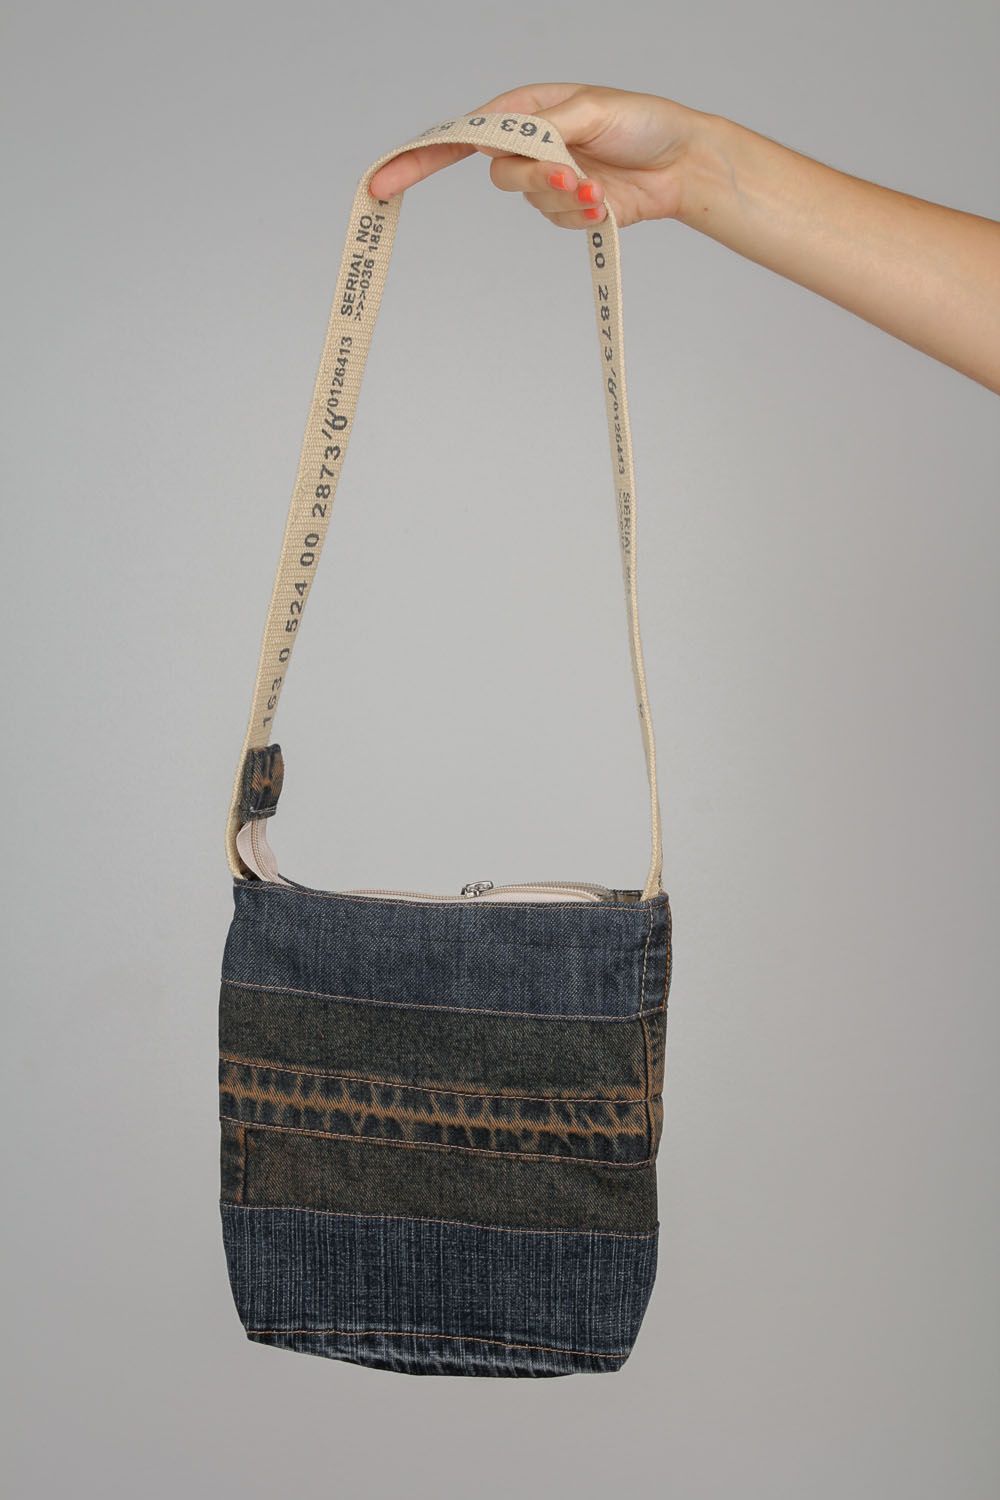 Blue Cross Body Purse Steampunk Multi Pockets, Men Women Jeans Denim Over  Shoulder Bag, Small Crossbody Pouch | Denim crafts diy, Upcycle clothes  diy, Blue jeans crafts